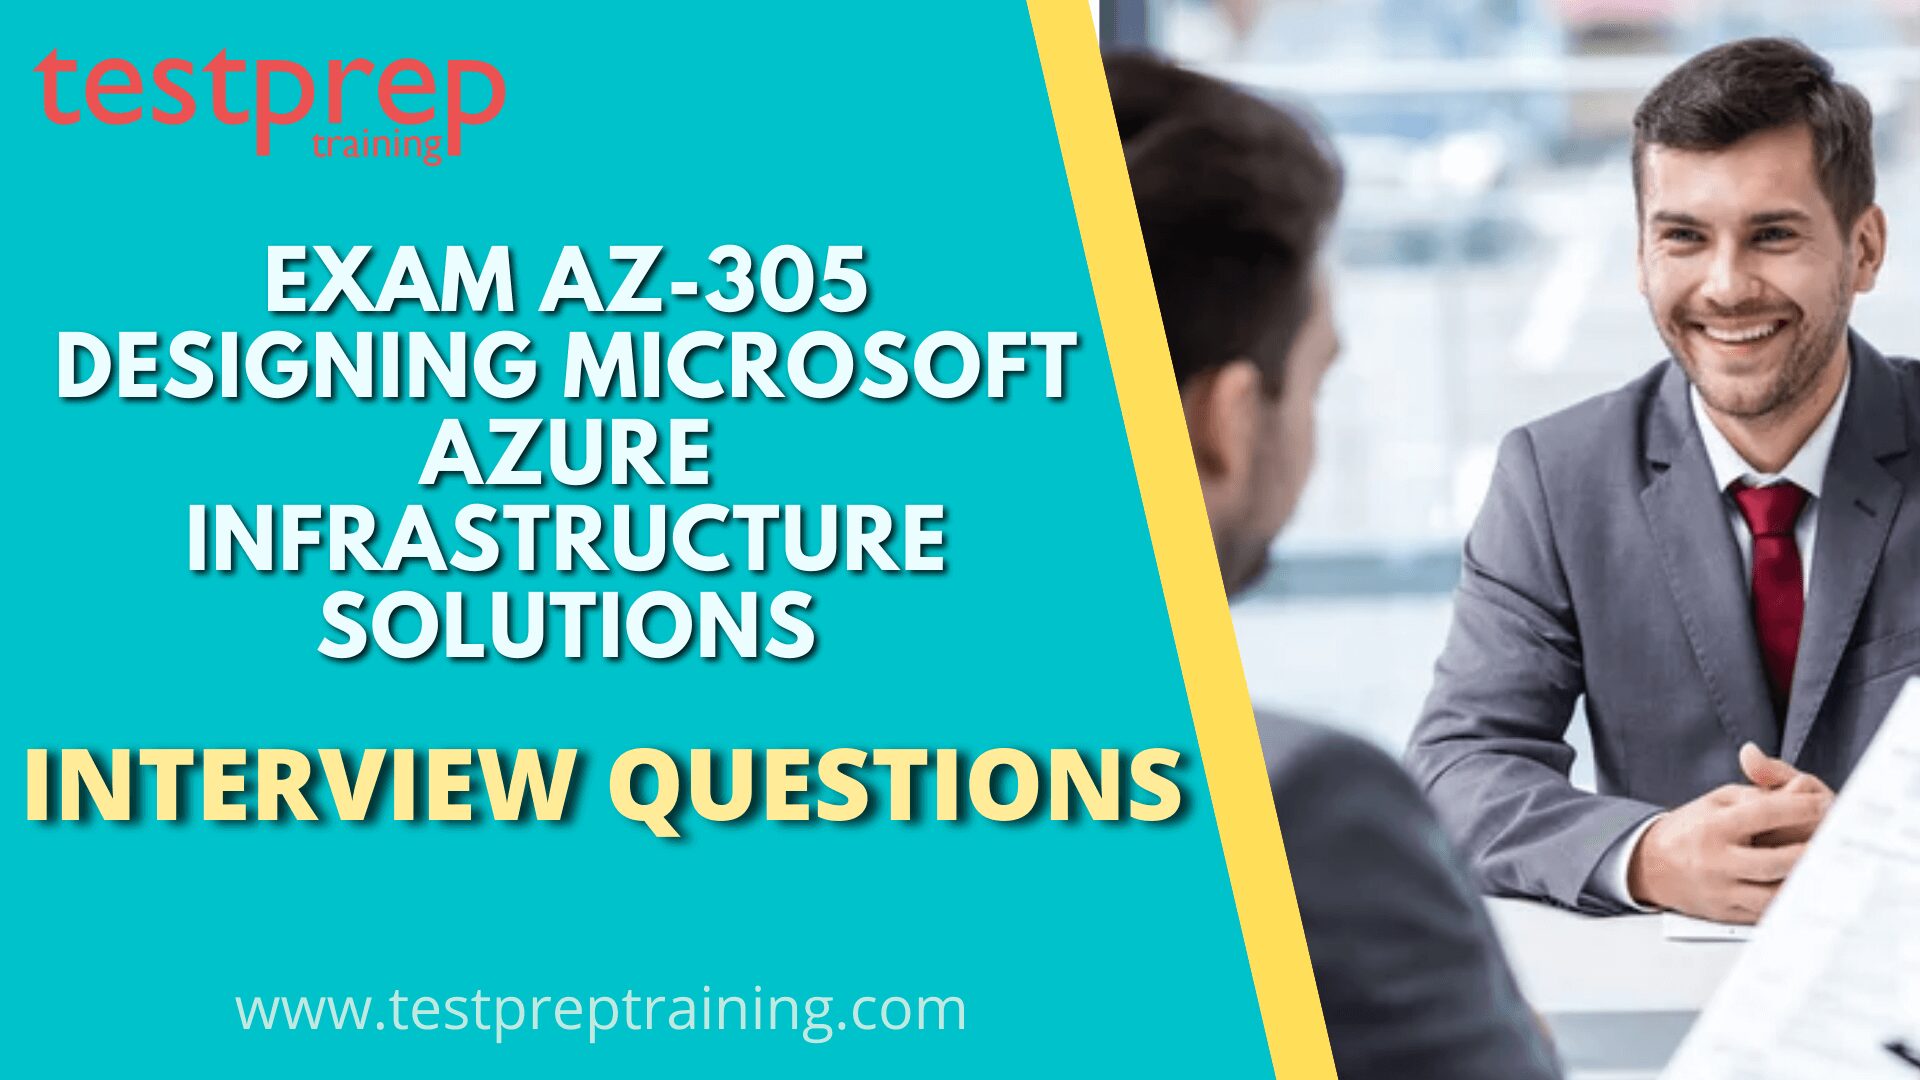 Microsoft Exam AZ-305 interview questions